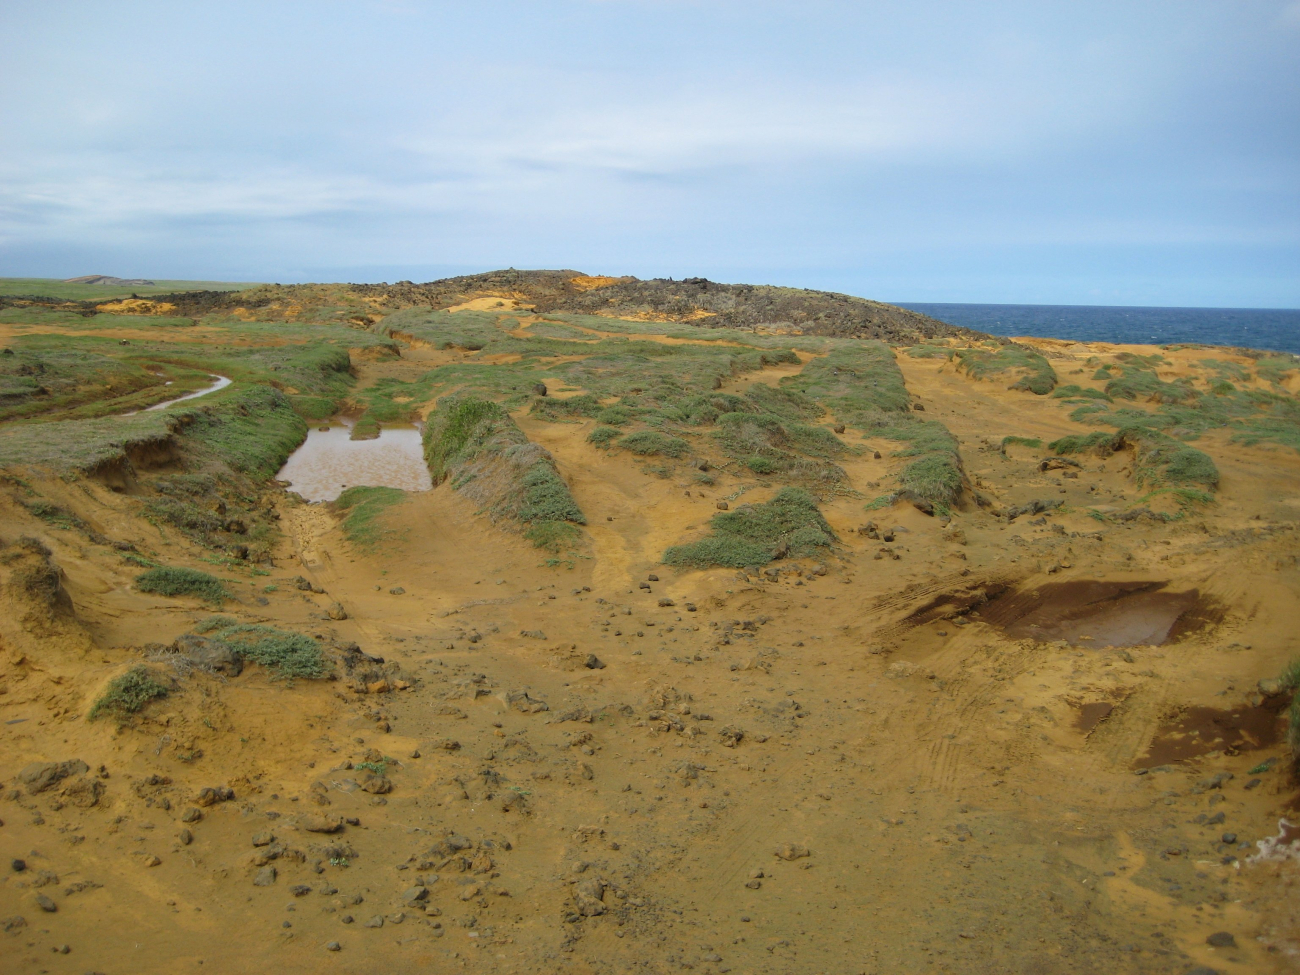 Erosion along coastal dune field